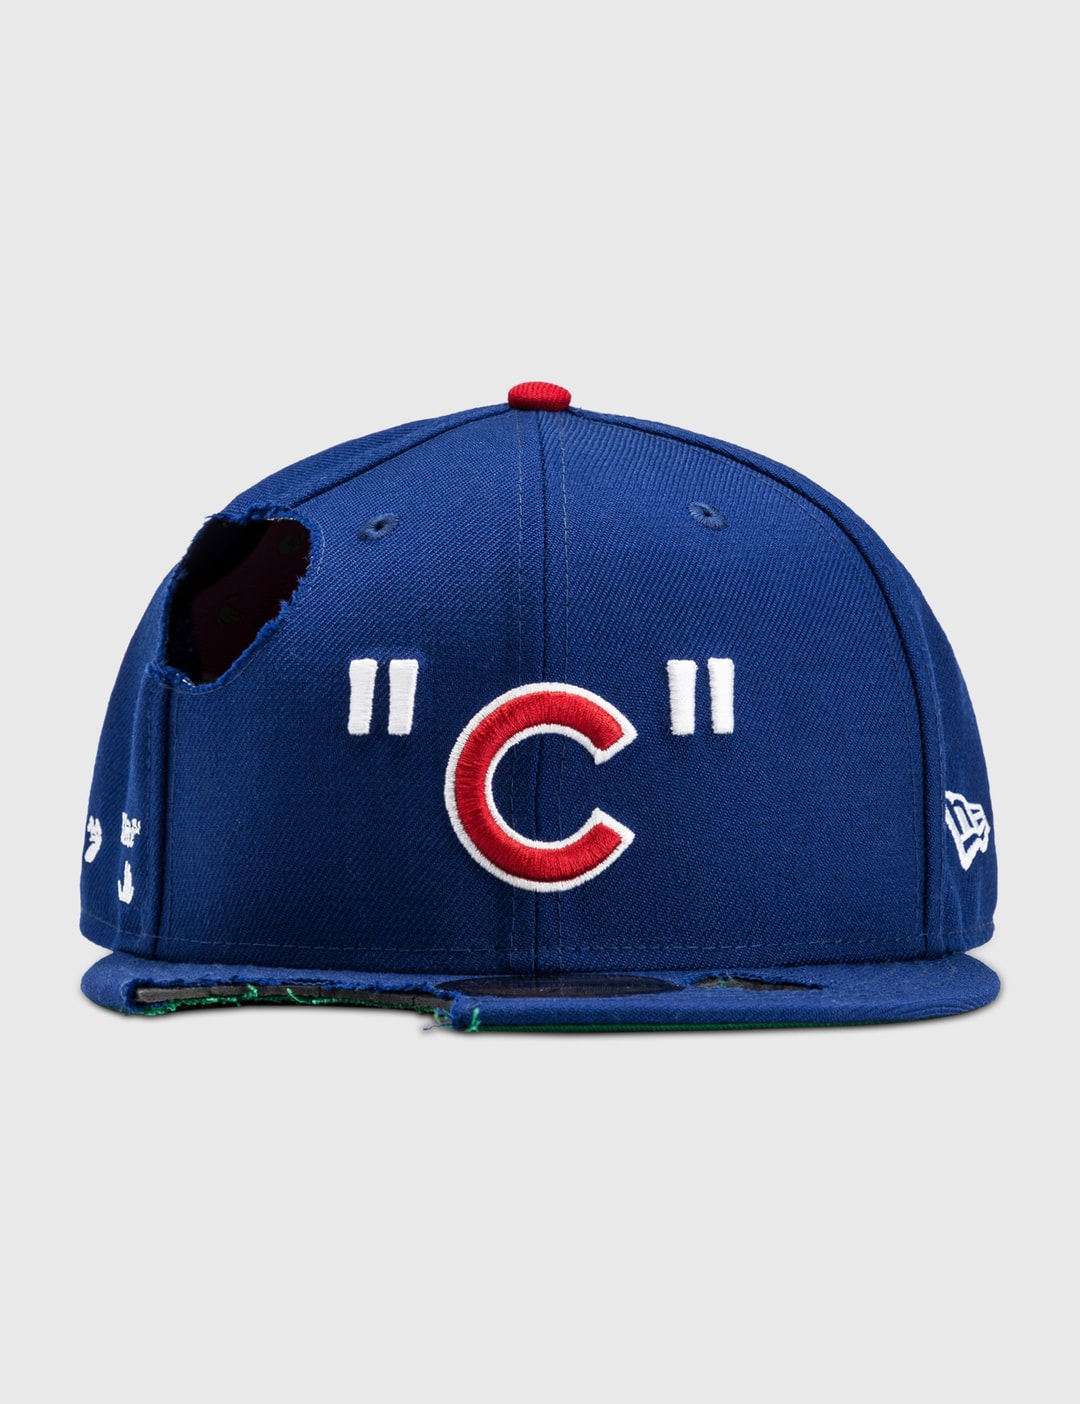 OFF-WHITE x MLB CHICAGO CUBS CAP